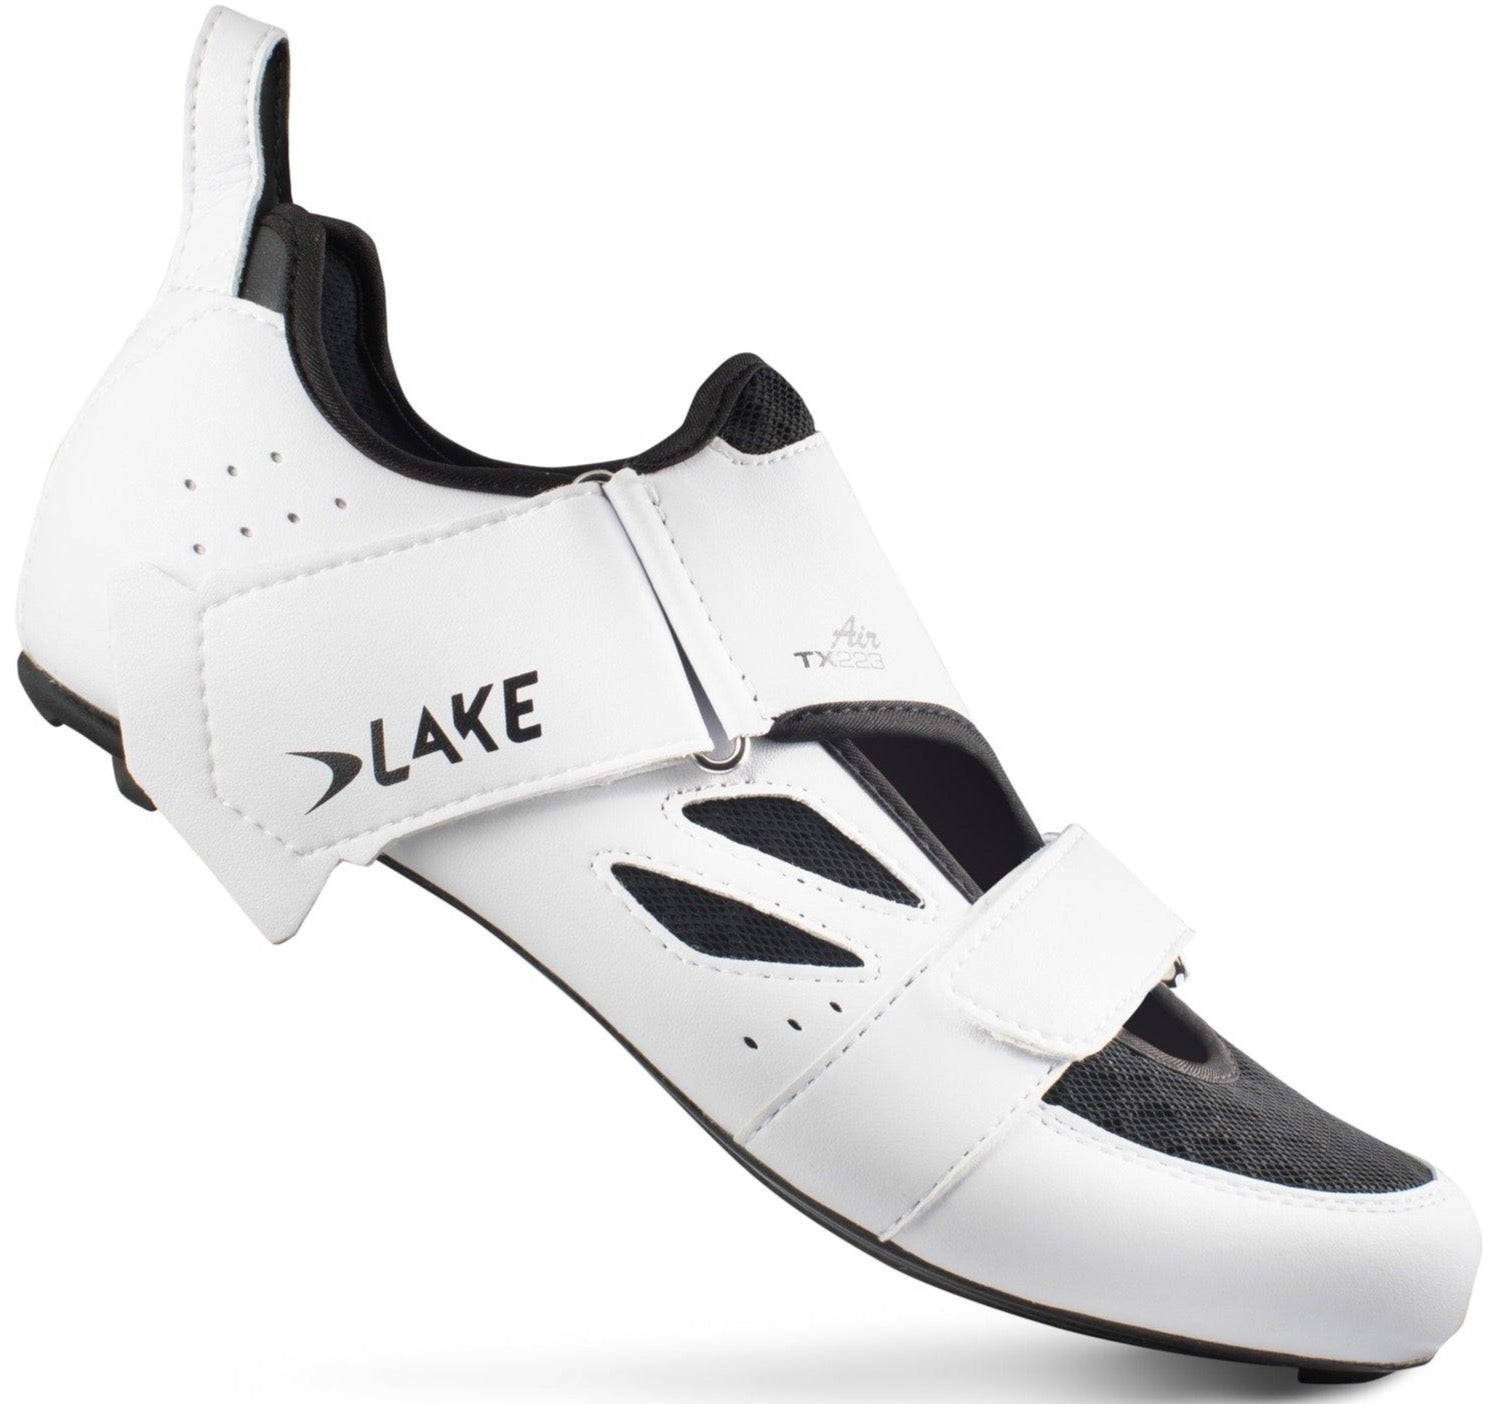 Lake Cycling TX223 Air Triathlon Cycling Shoe